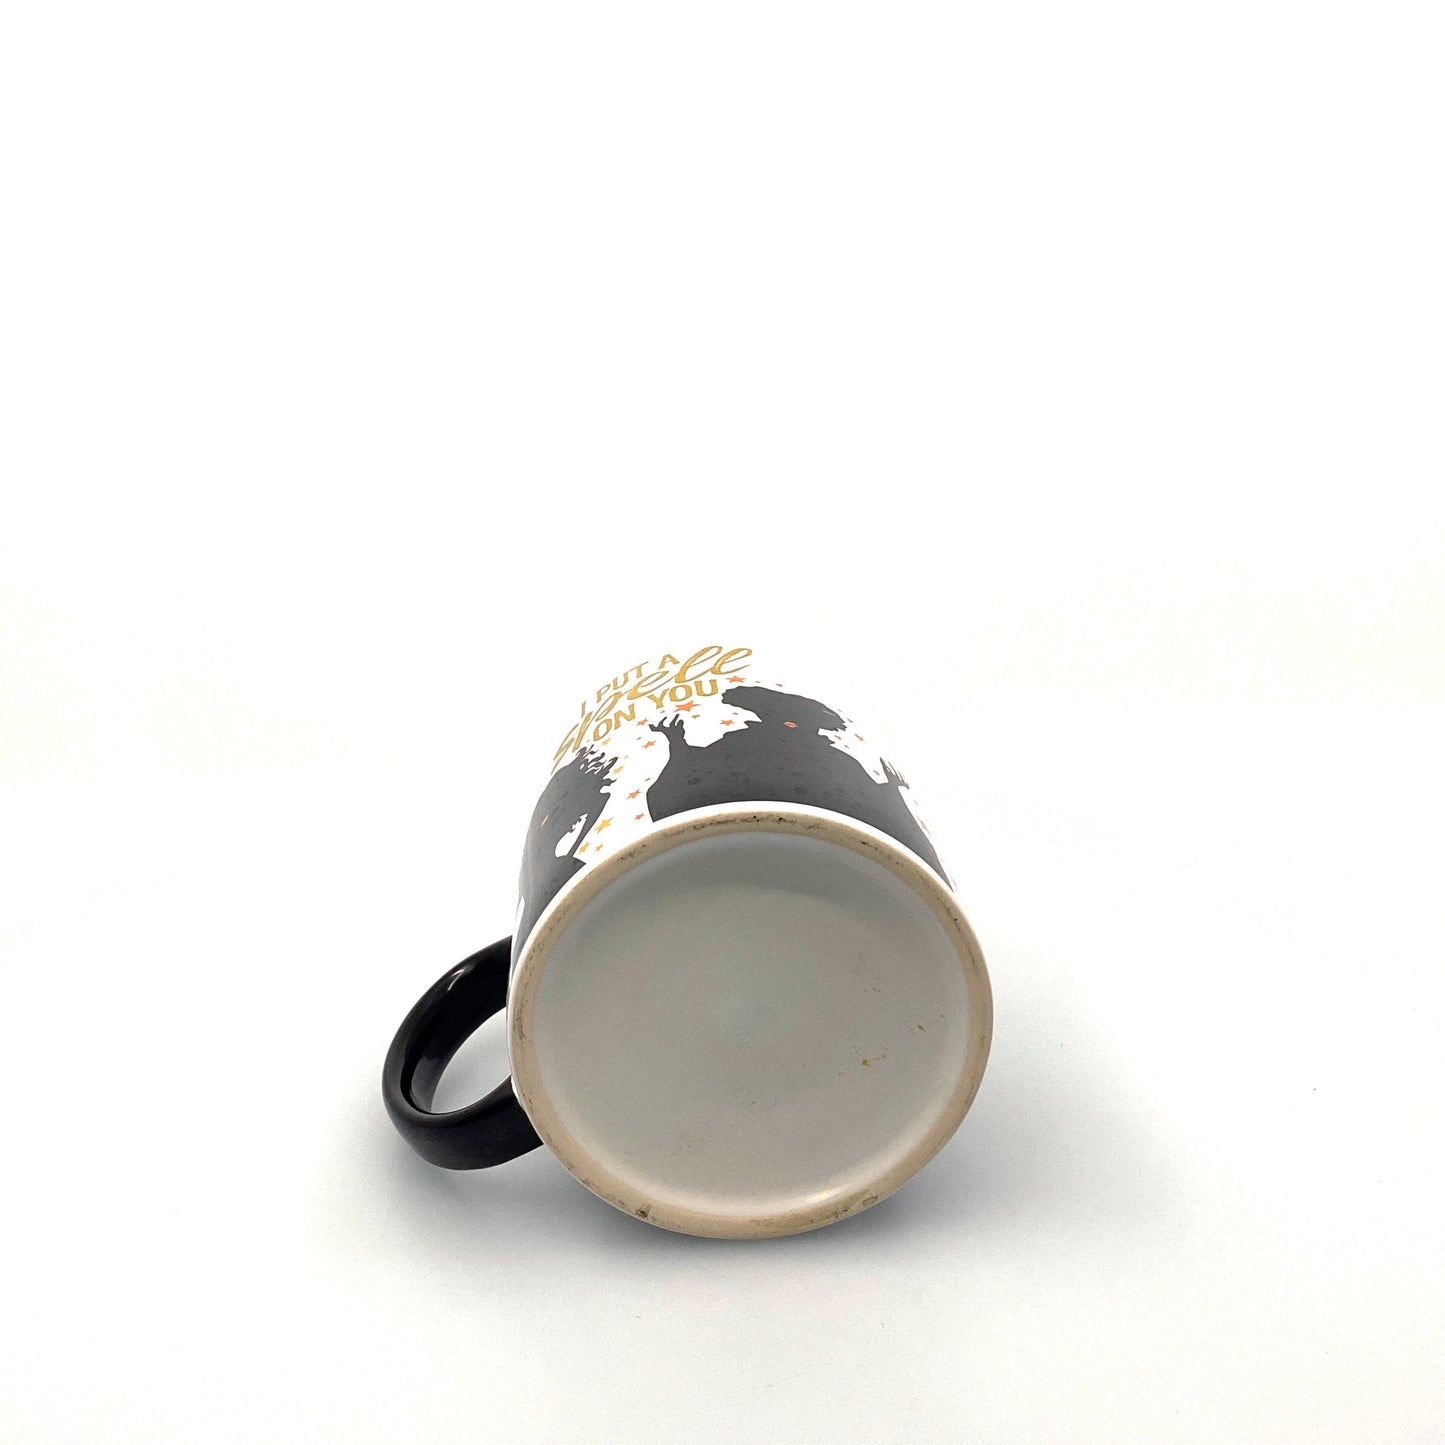 “I Put A Spell On You…And You’re Mine” Ceramic Coffee Cup Mug, Black - 12oz